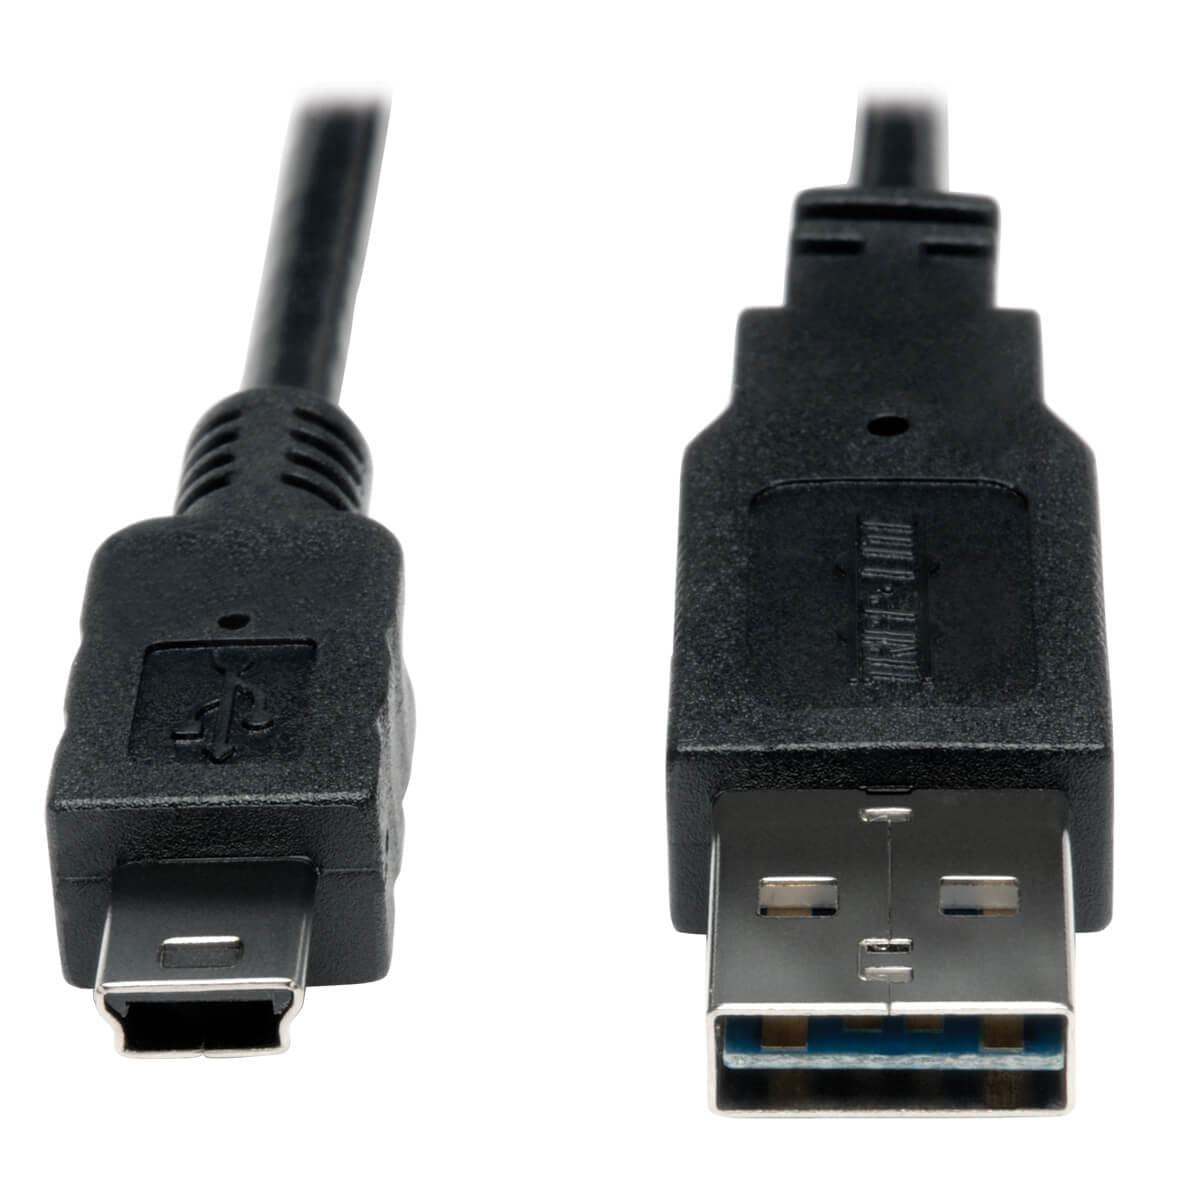 Tripp Lite Ur030-003 Universal Reversible Usb 2.0 Converter Adapter Cable (Reversible A To 5Pin Mini B M/M), 3 Ft. (0.91 M)